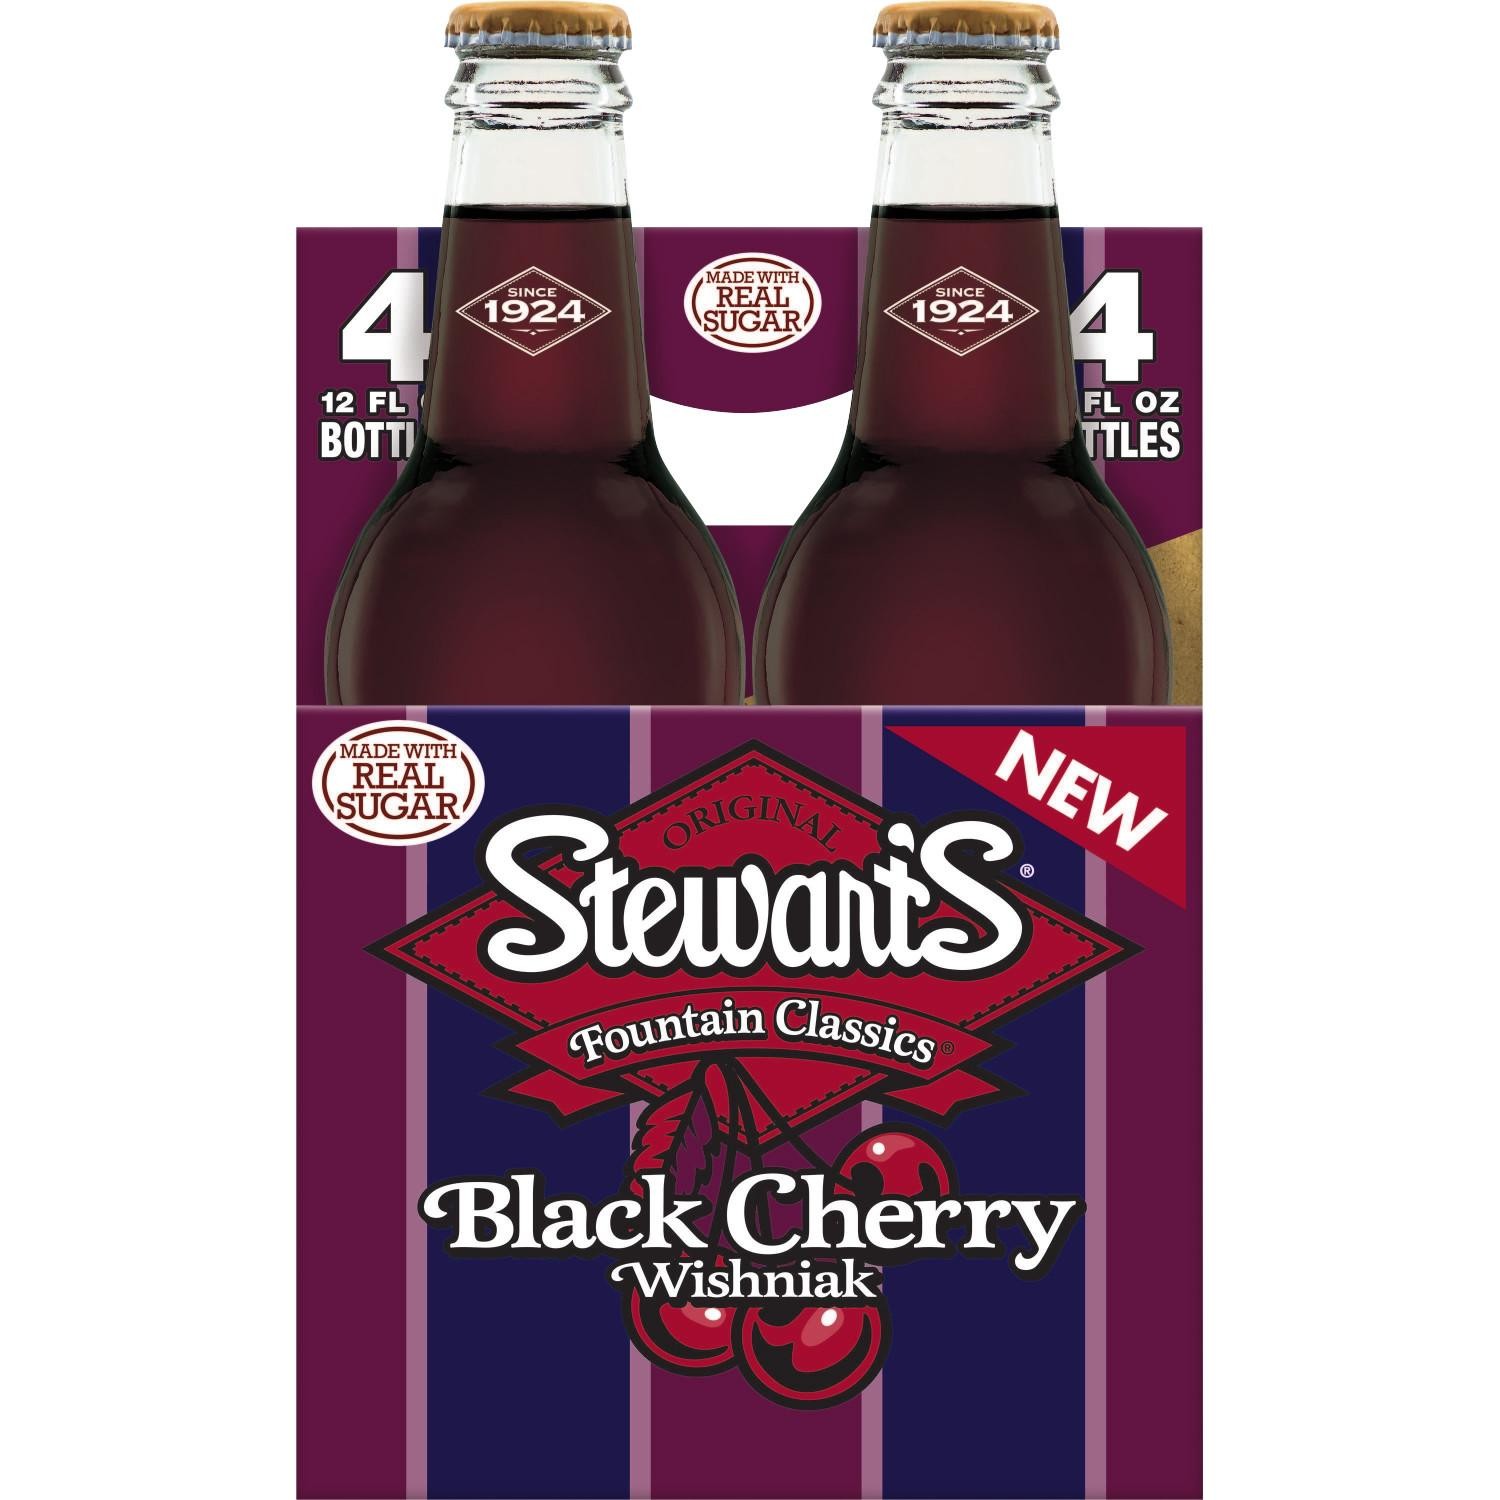 (3 Pack) Stewart's Black Cherry Wishniak Made with Sugar, 12 Fl Oz, 4 Pack